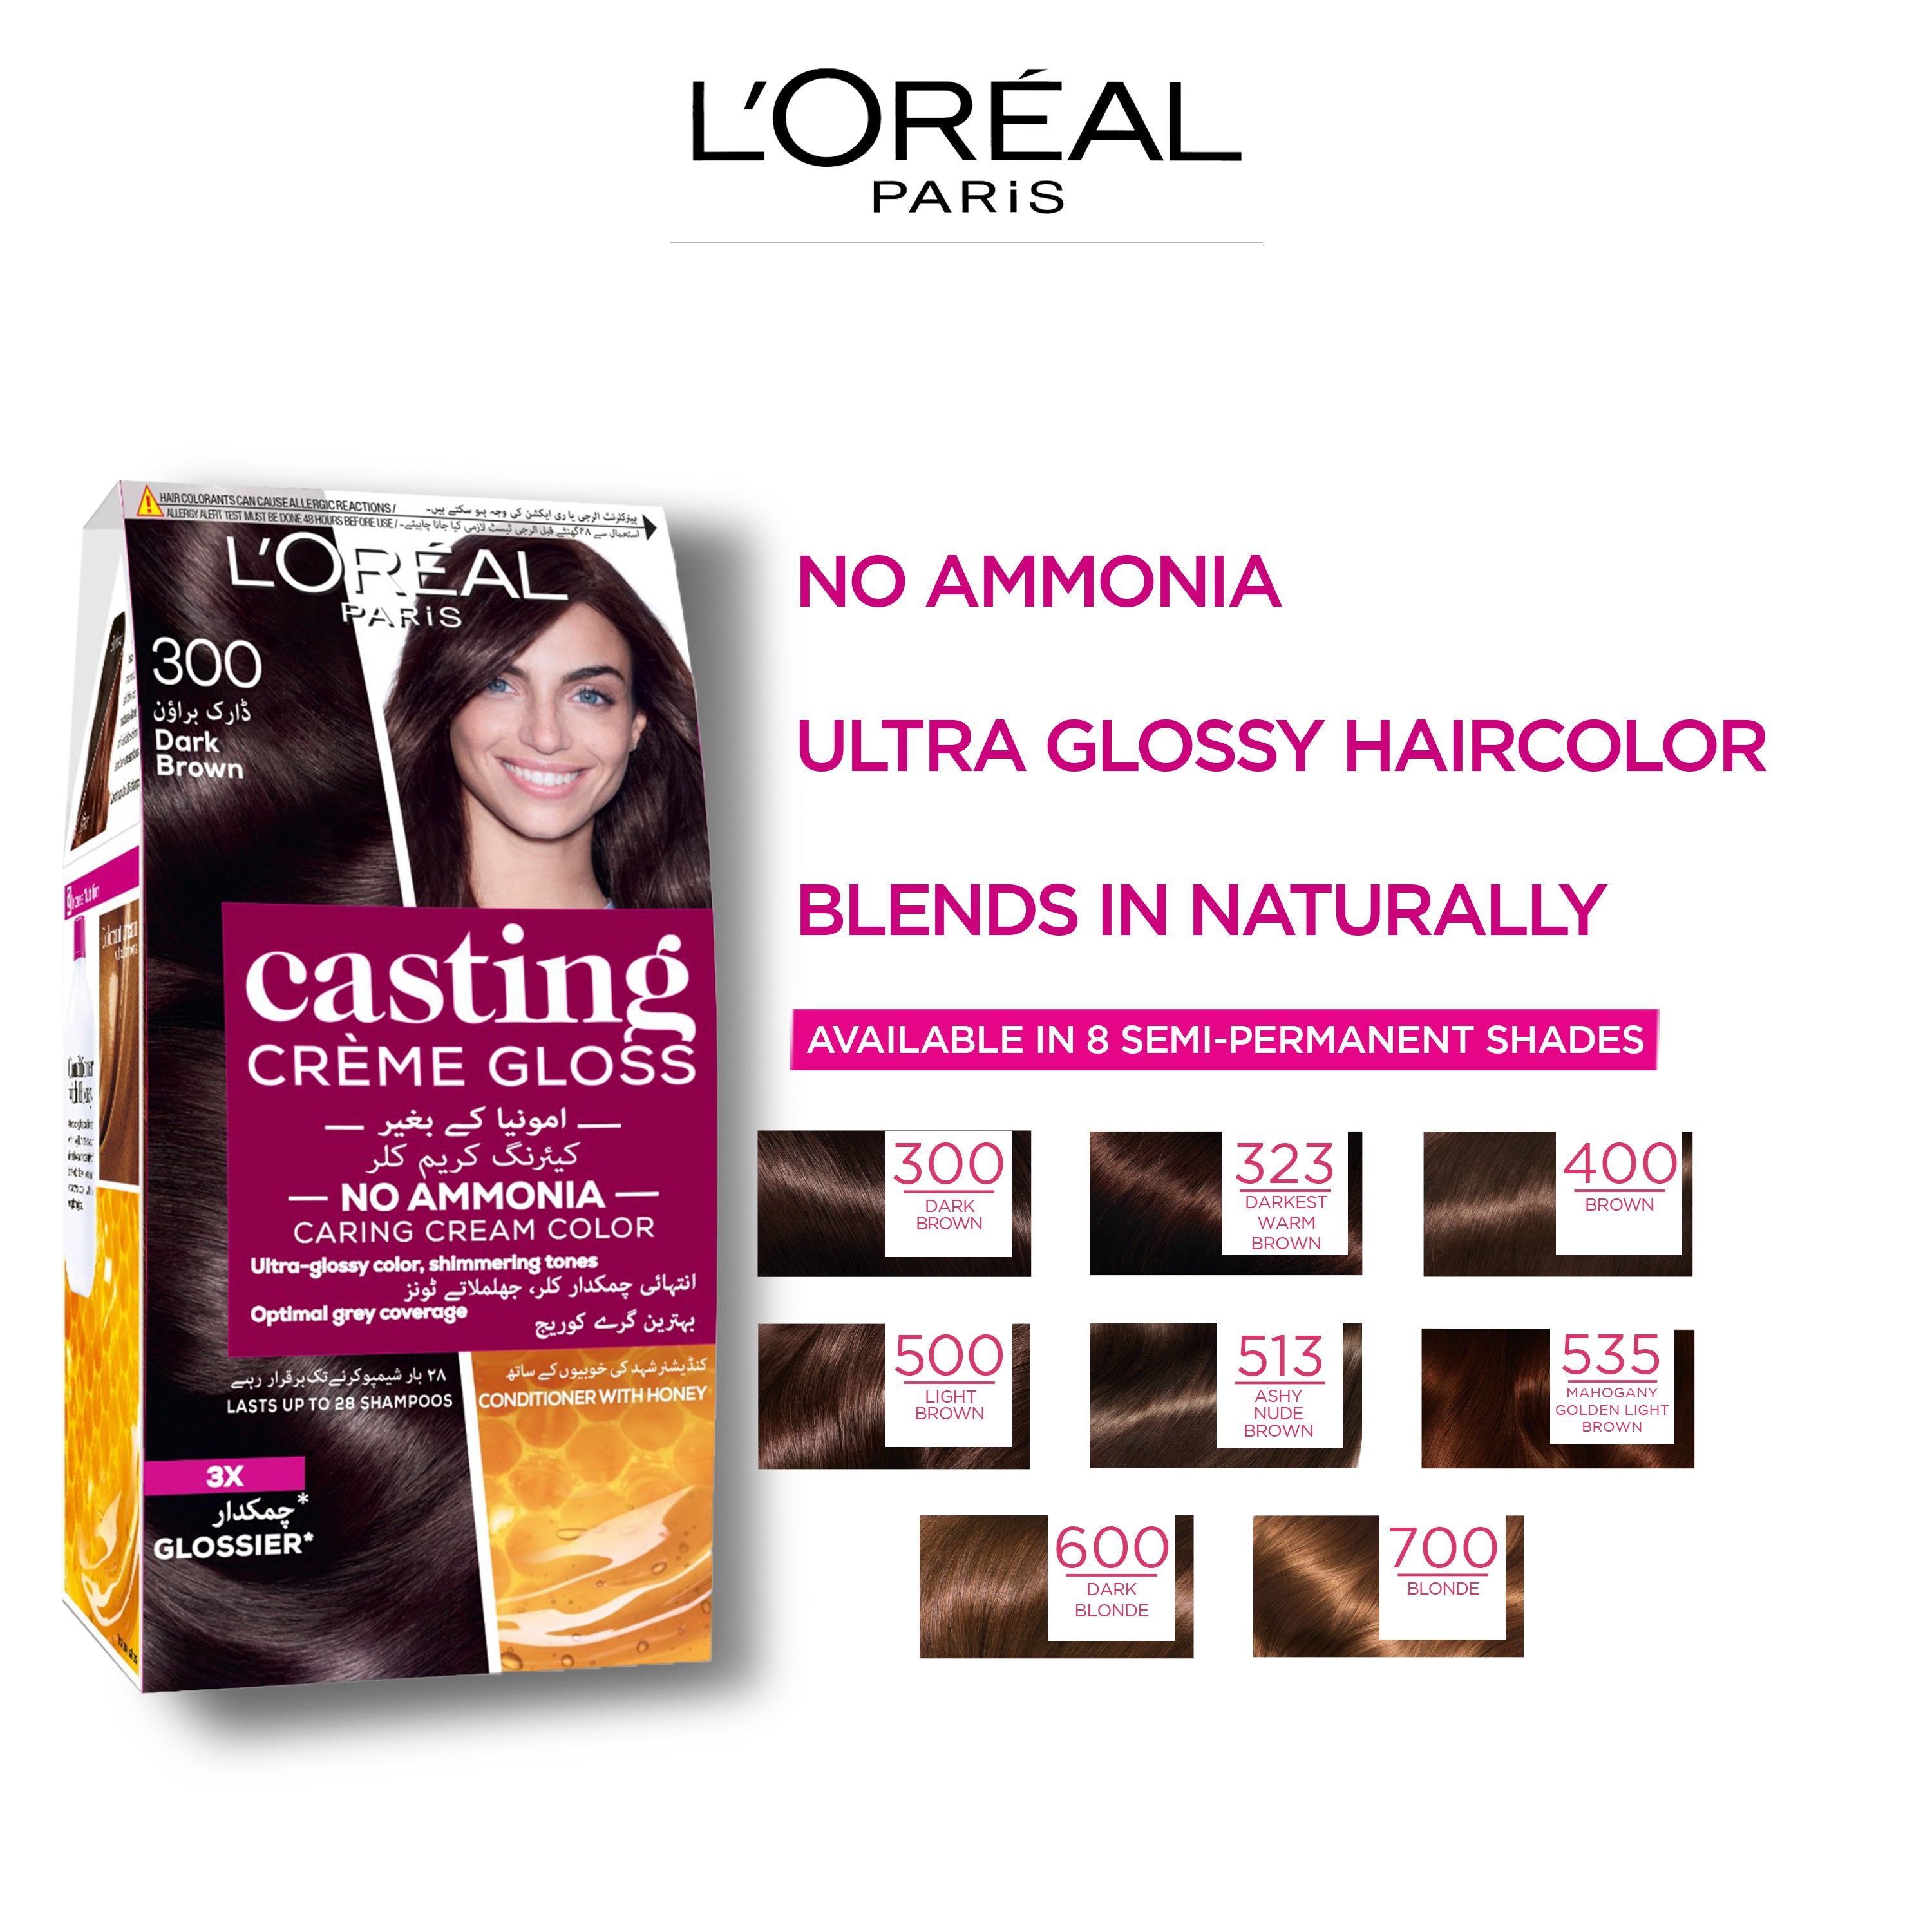 LOreal Paris Casting Creme Gloss - 210 Ashy Black Hair Color